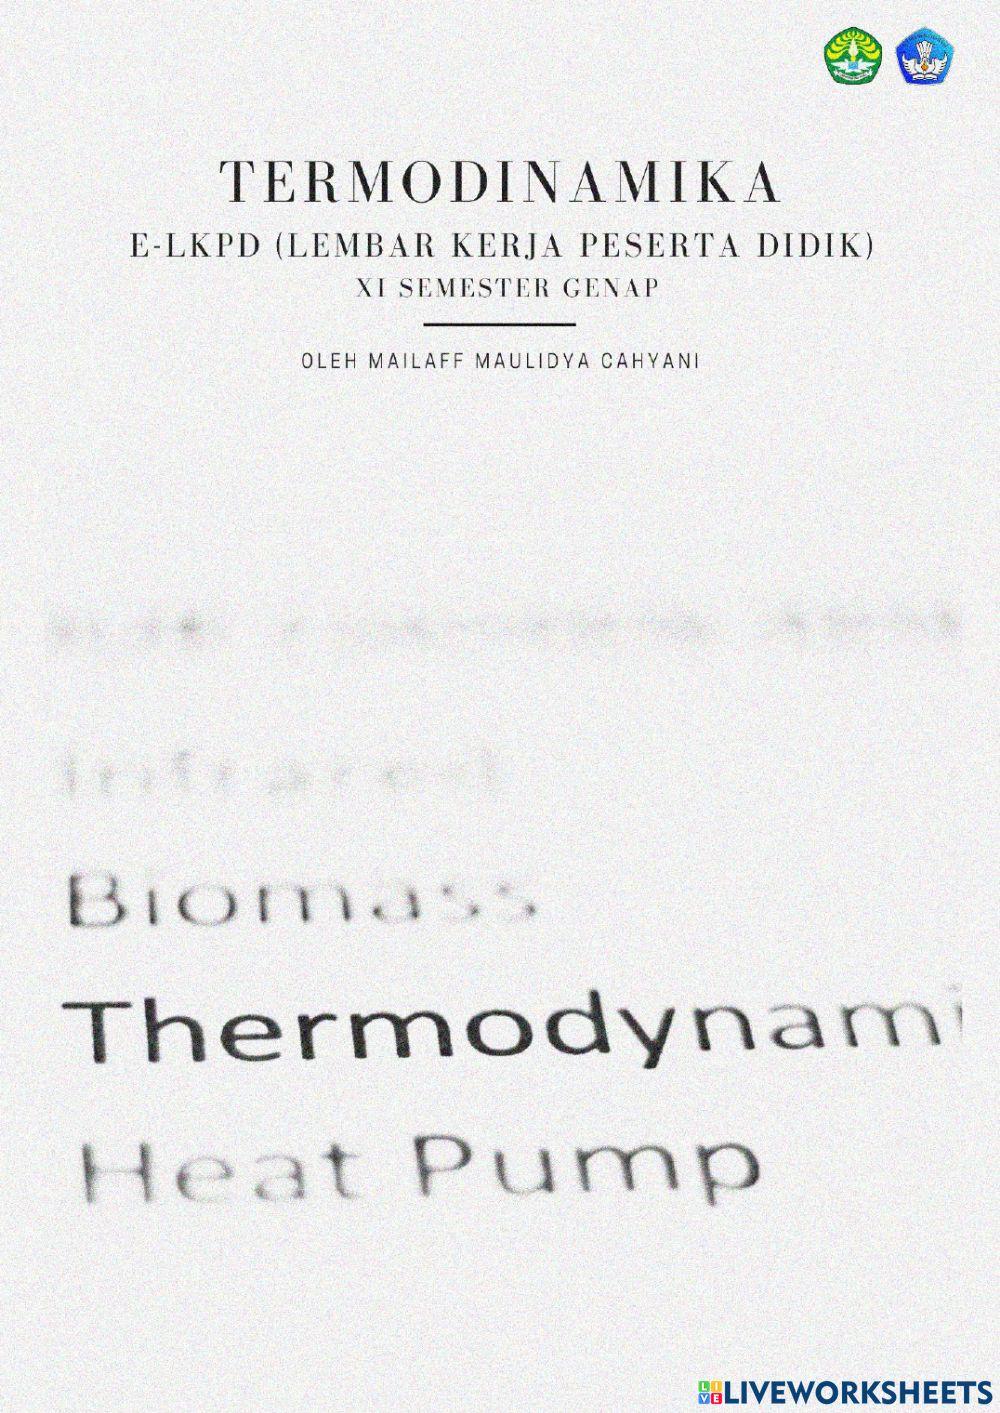 E-LKPD termodinamika